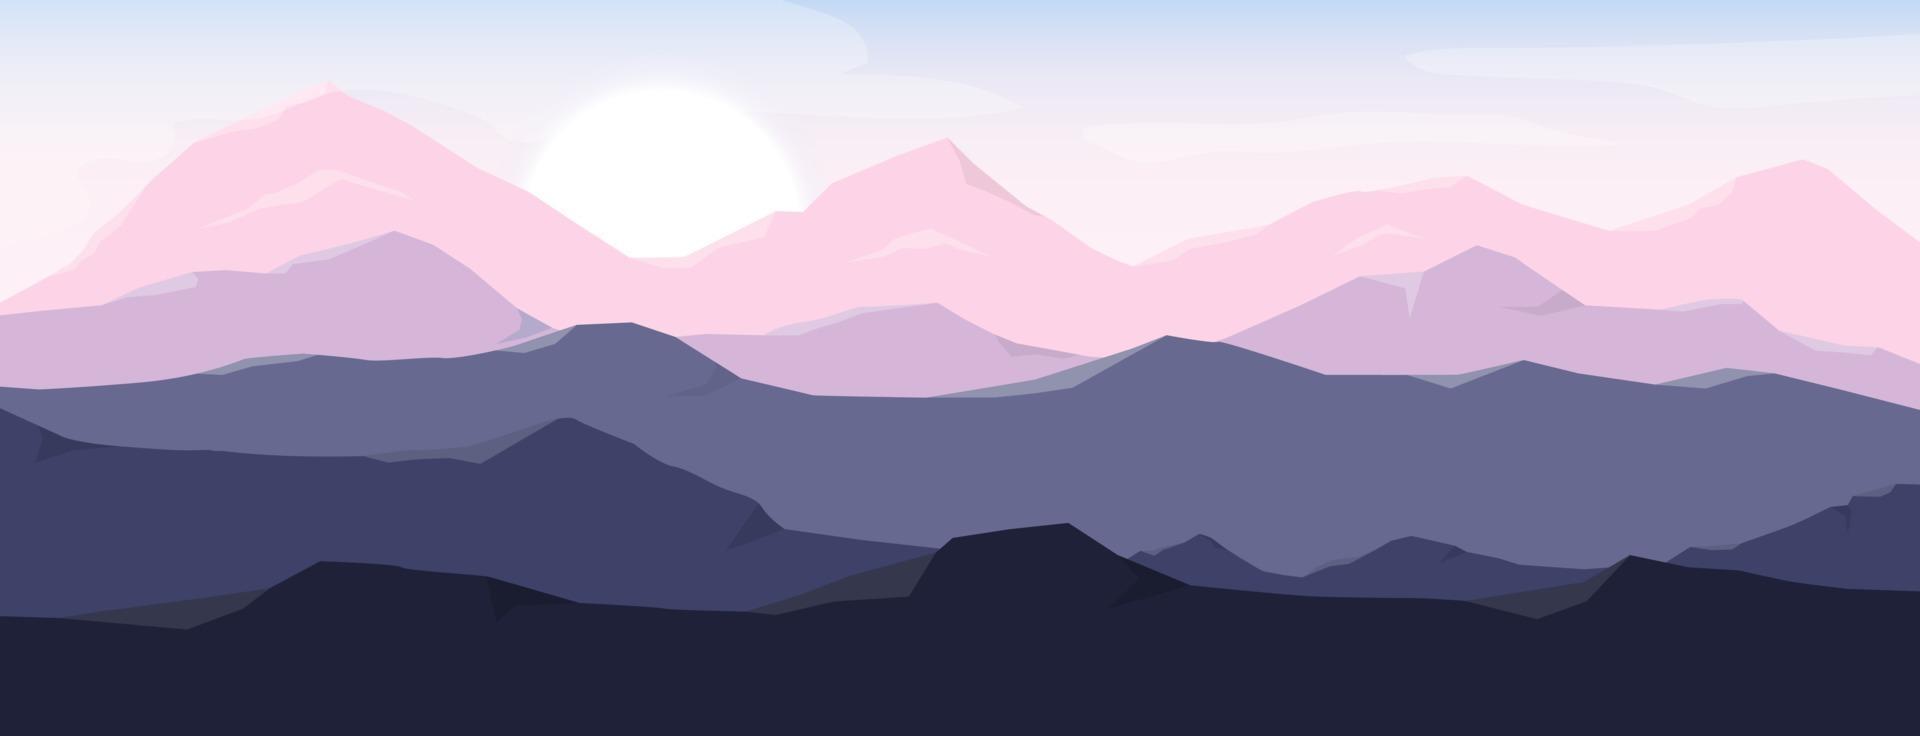 Mountain beautiful landscape background vector design illustration